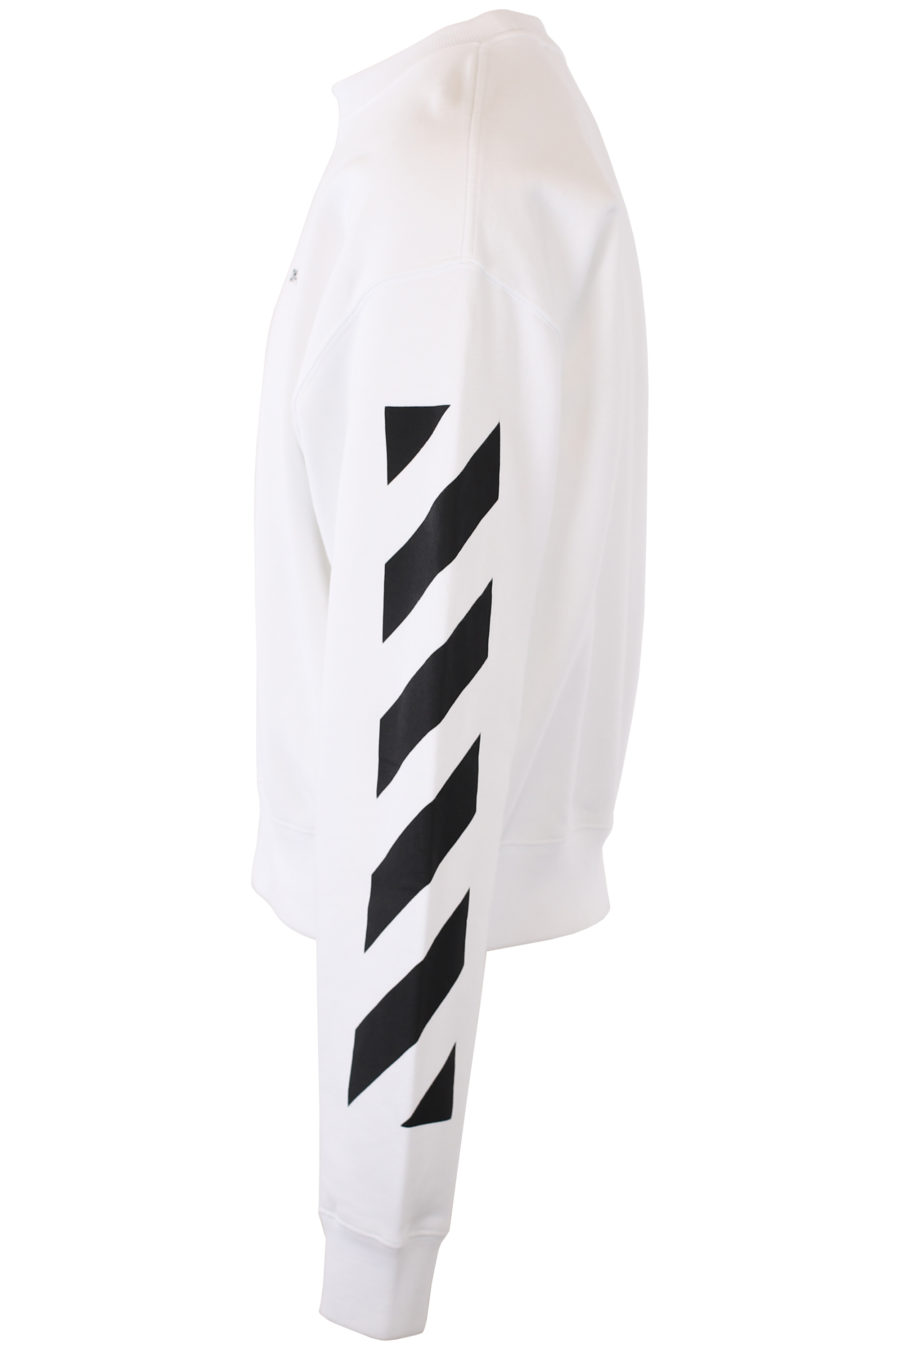 White sweatshirt with logo and diagonal stripes on sleeves - IMG 2366